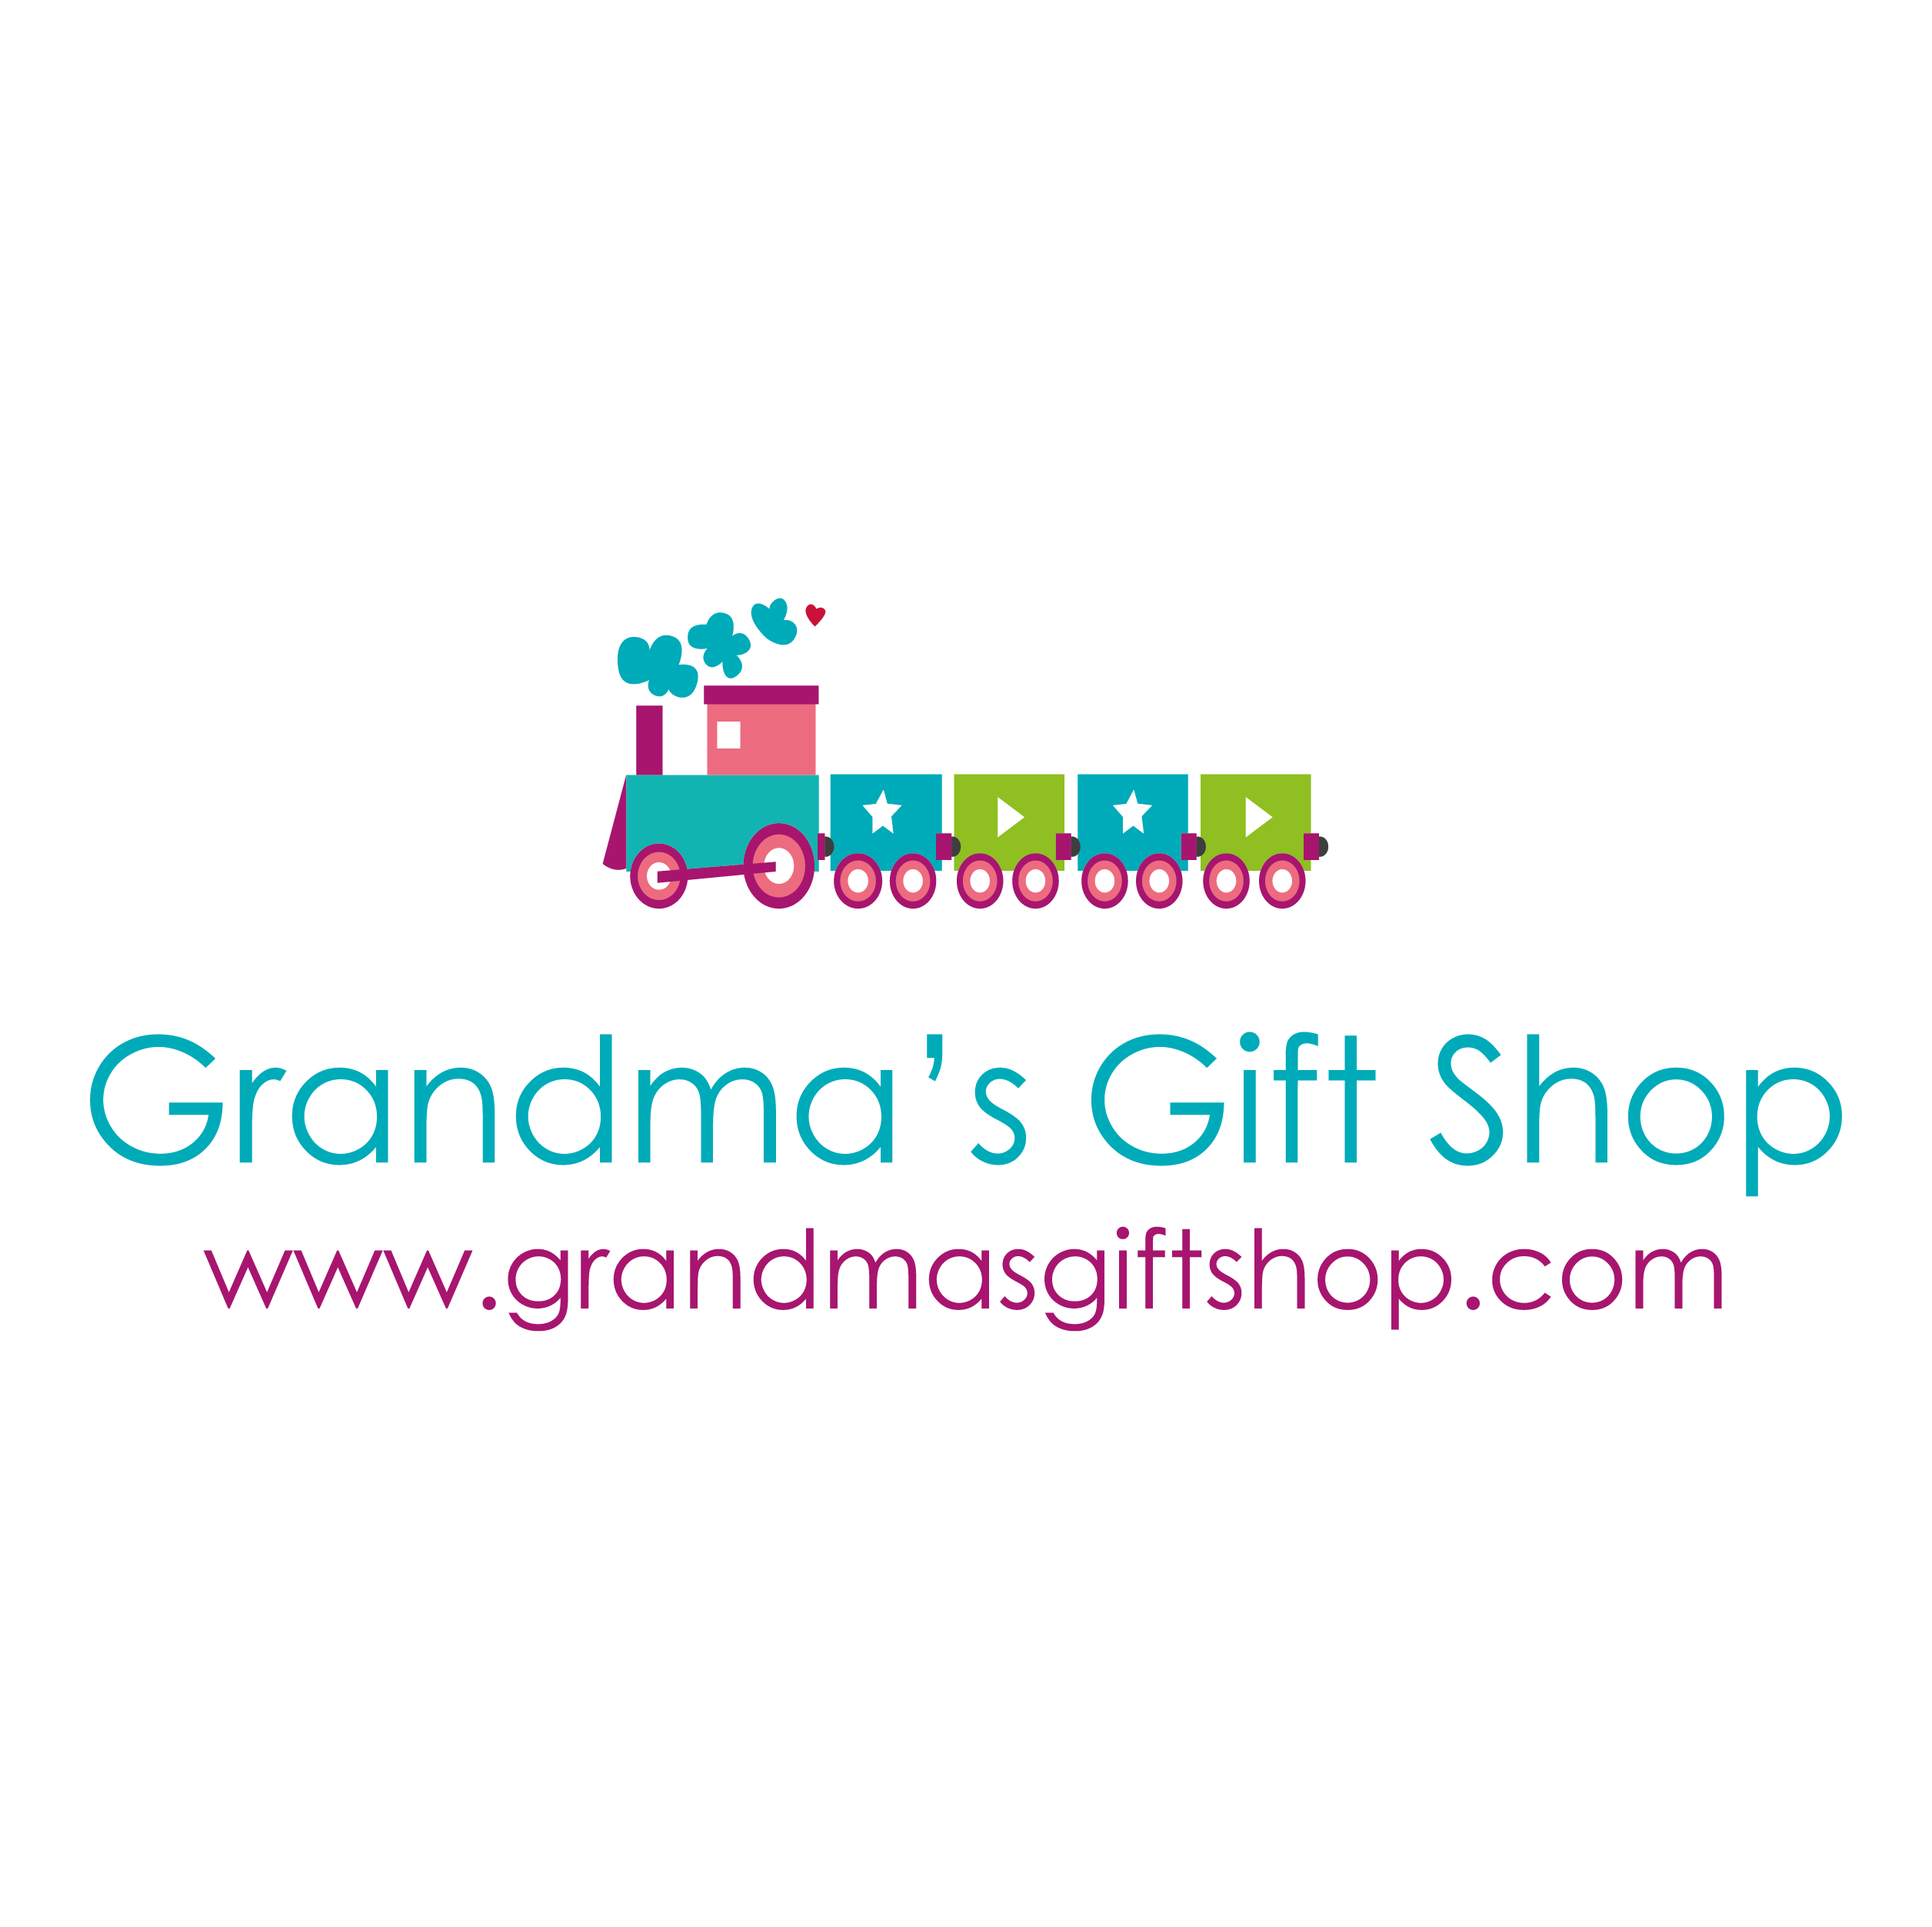 Grandma's Gift Shop